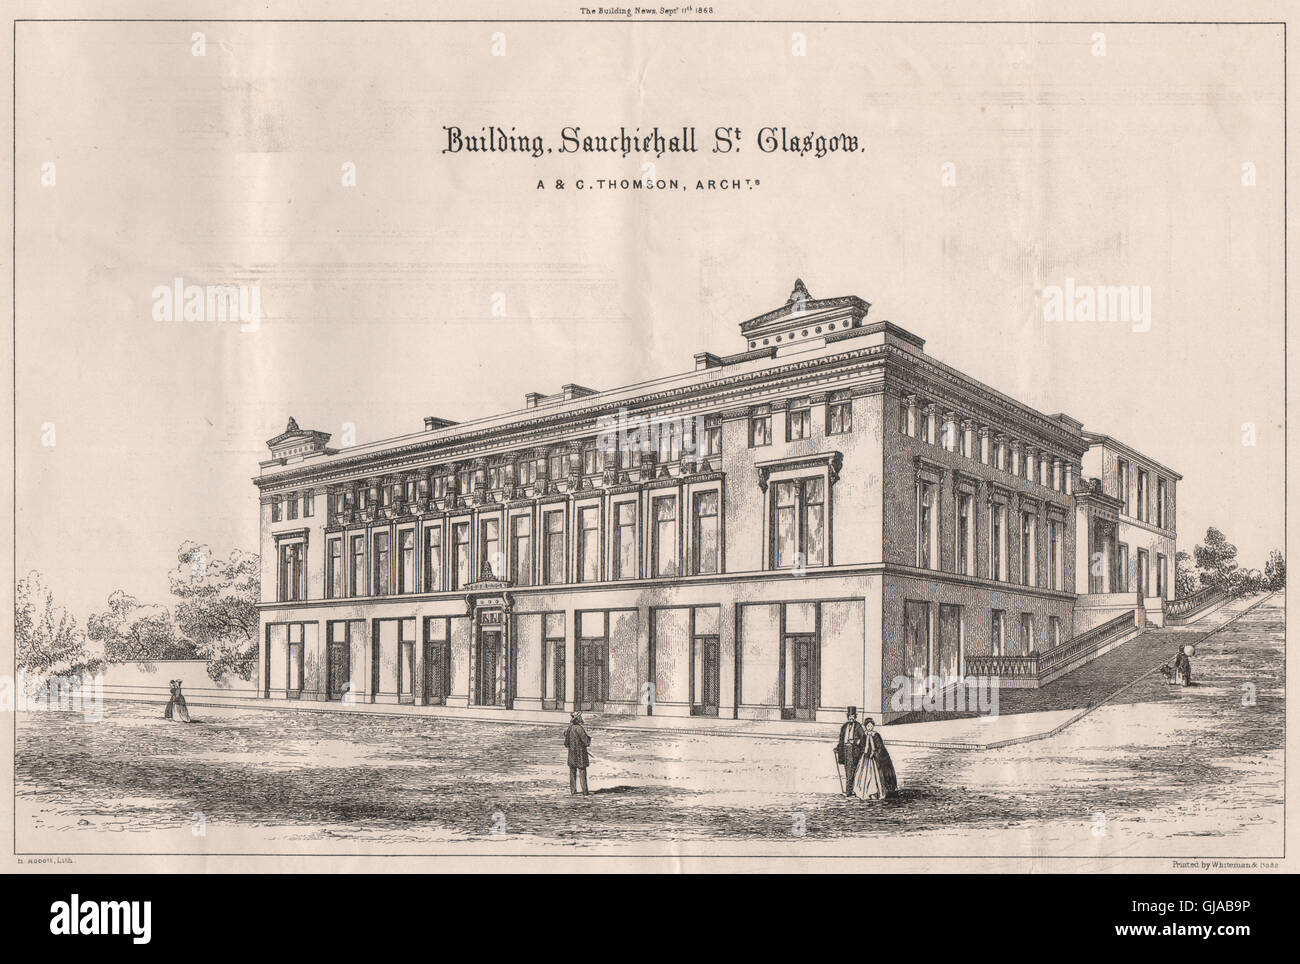 Building, Sauchiehall St., Glasgow; A & G. Thomson, Architects. Scotland, 1868 Stock Photo